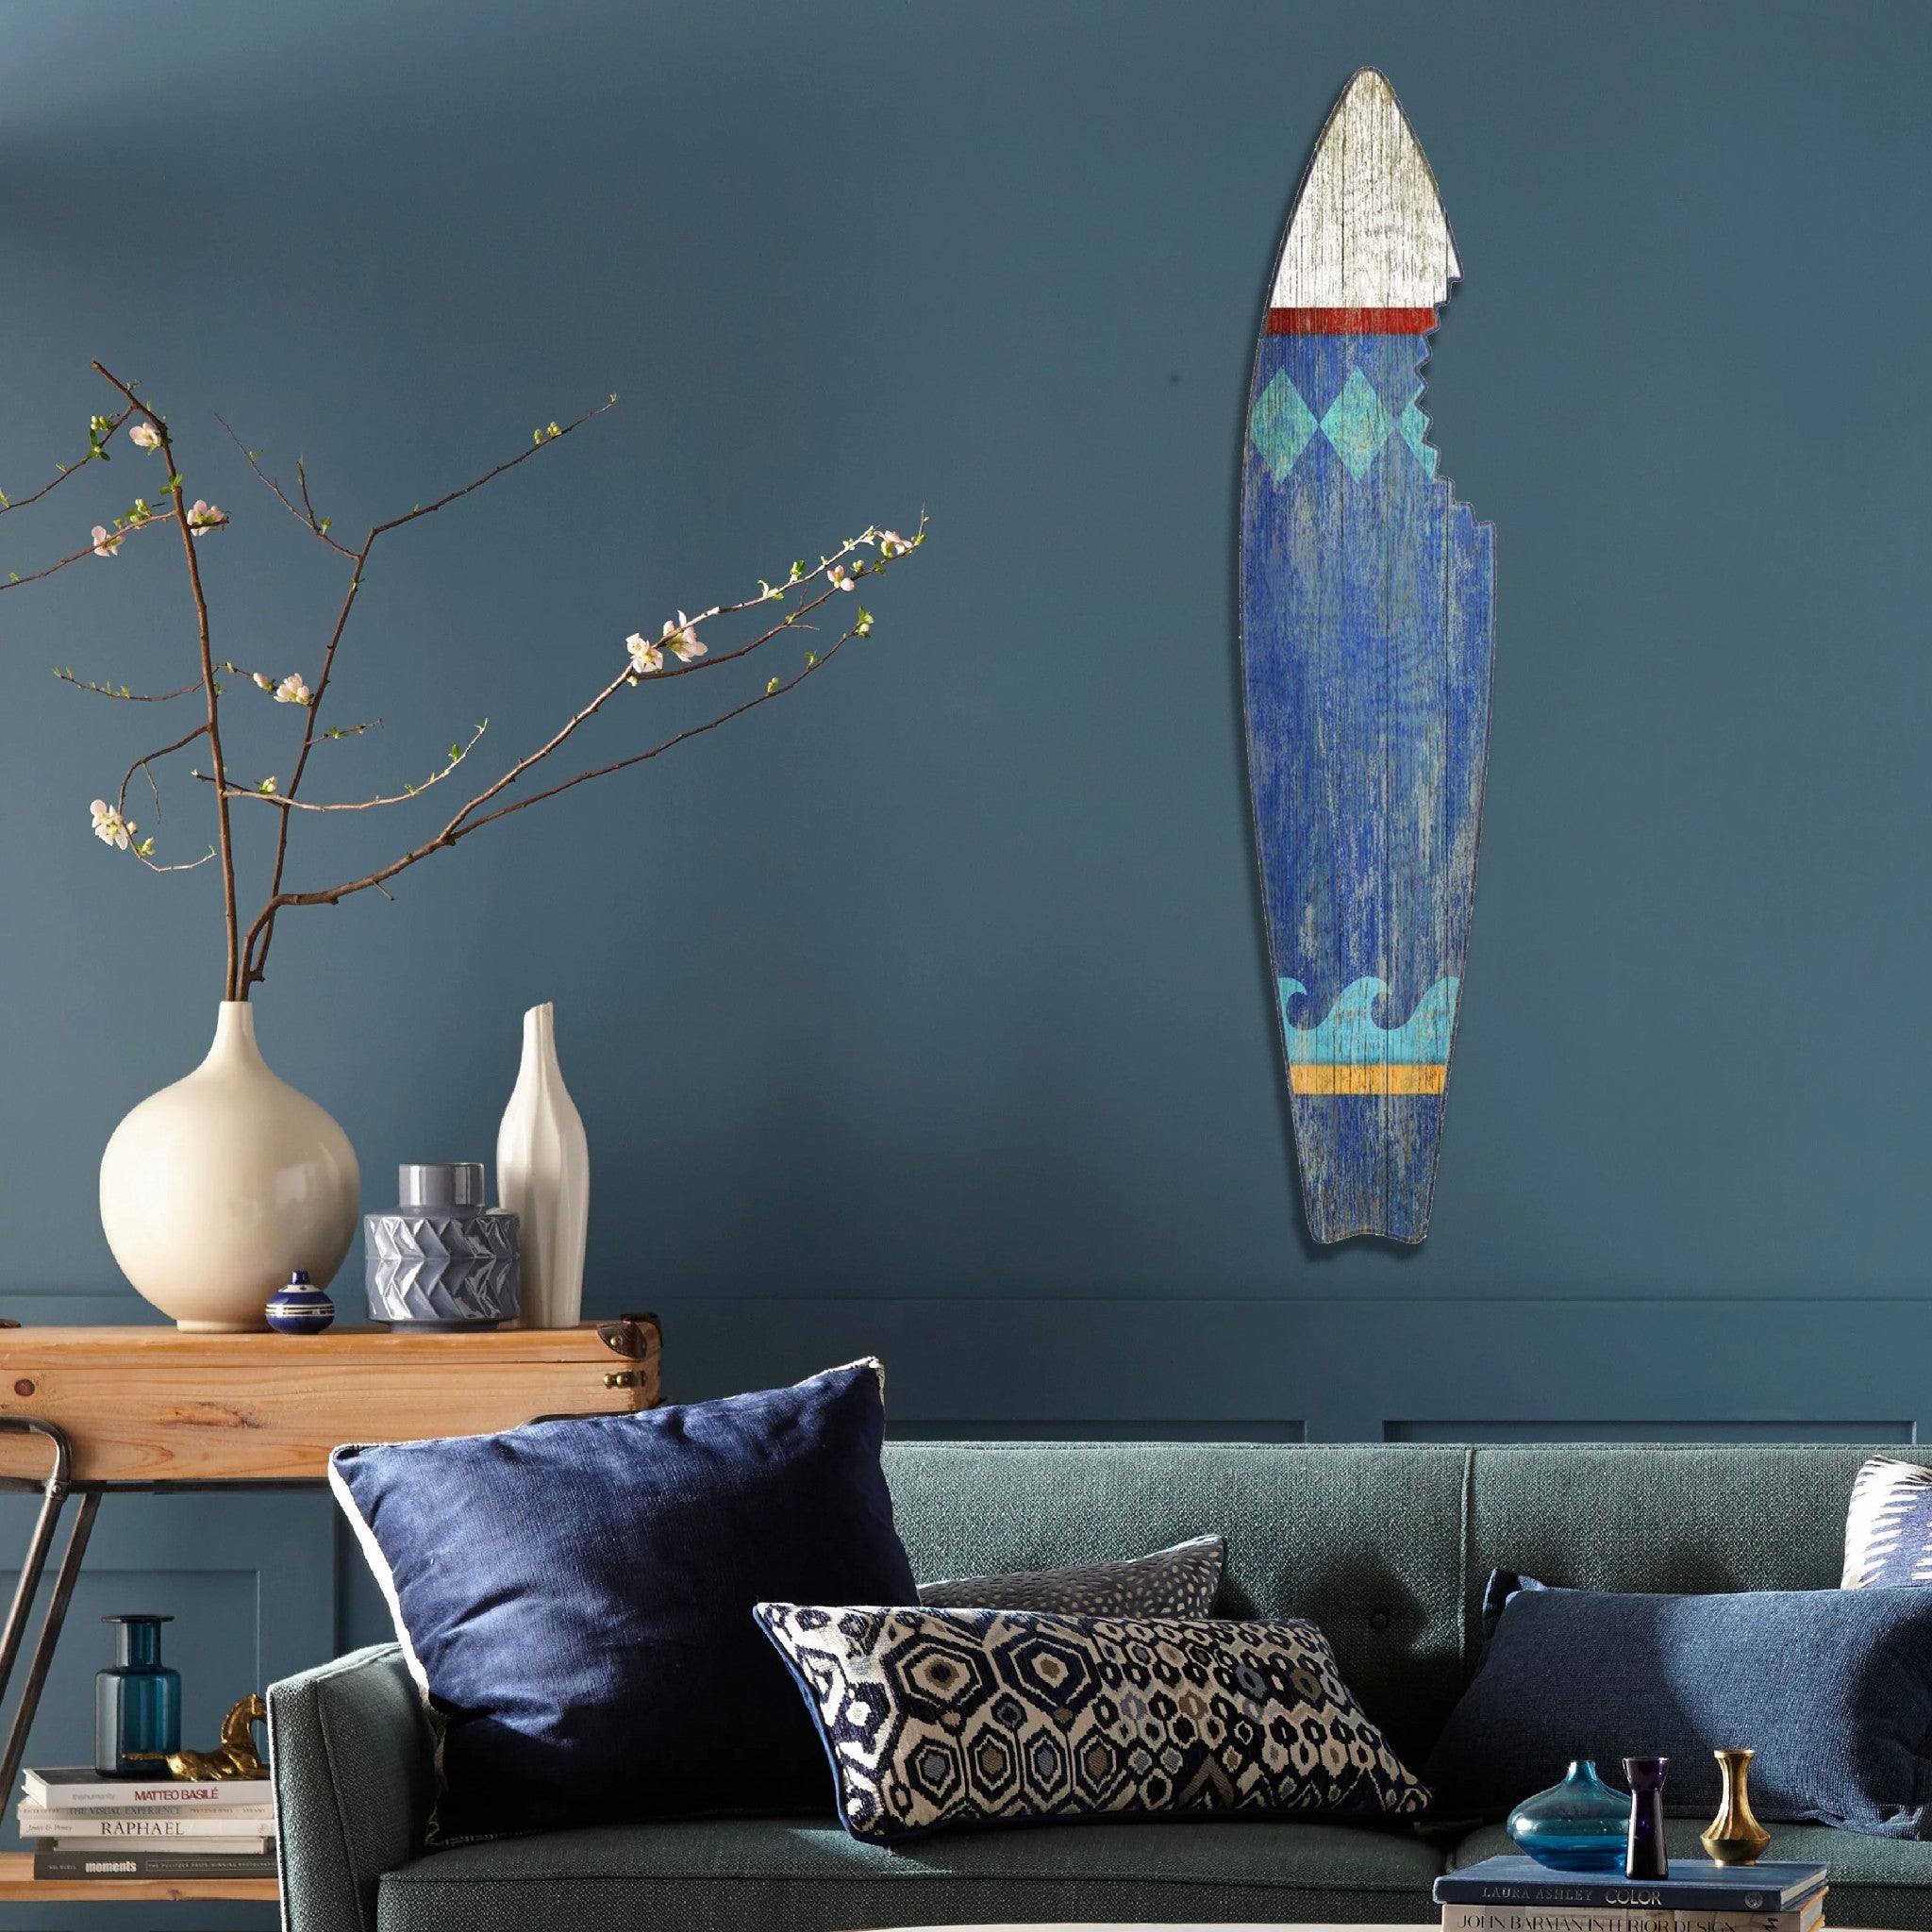 Vintage Sharkbite Blue Surfboard Wall Décor